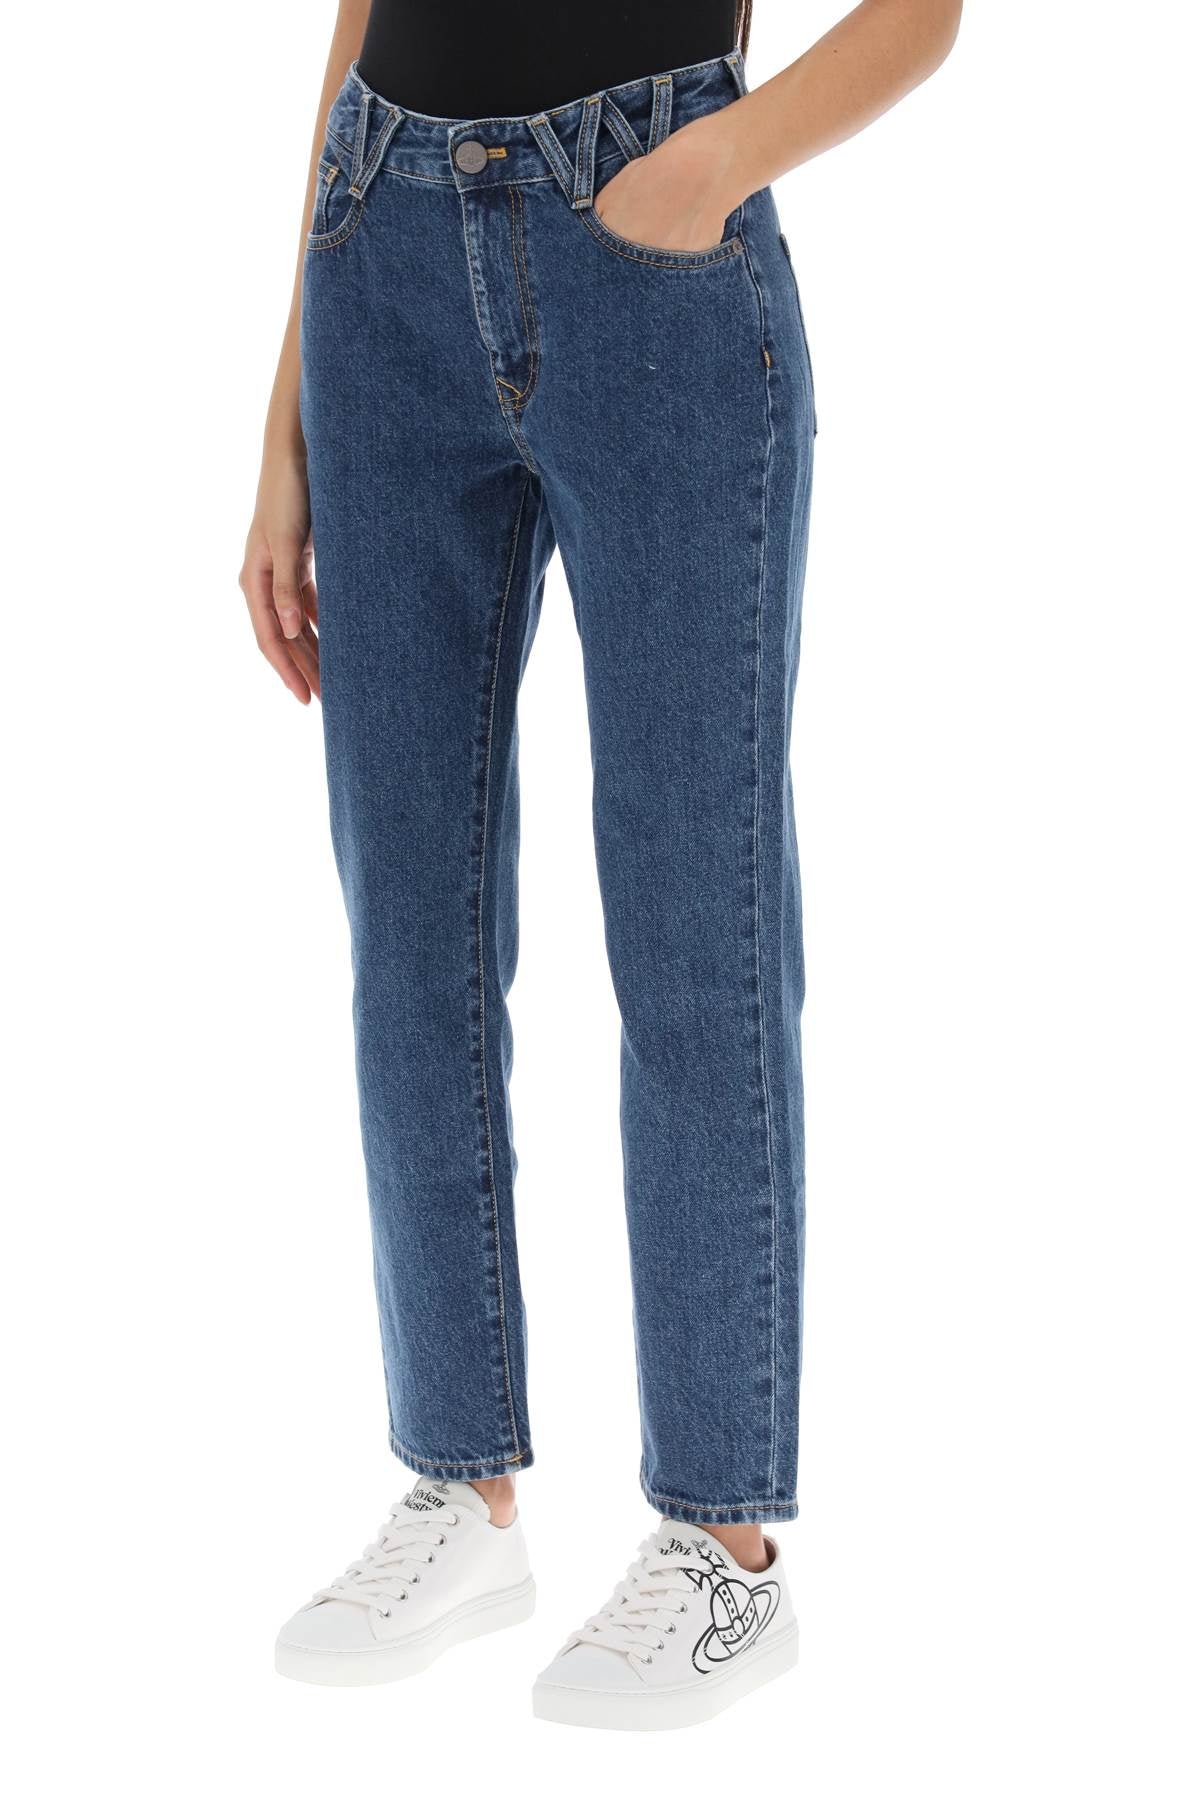 Vivienne westwood w harris straight leg jeans-3